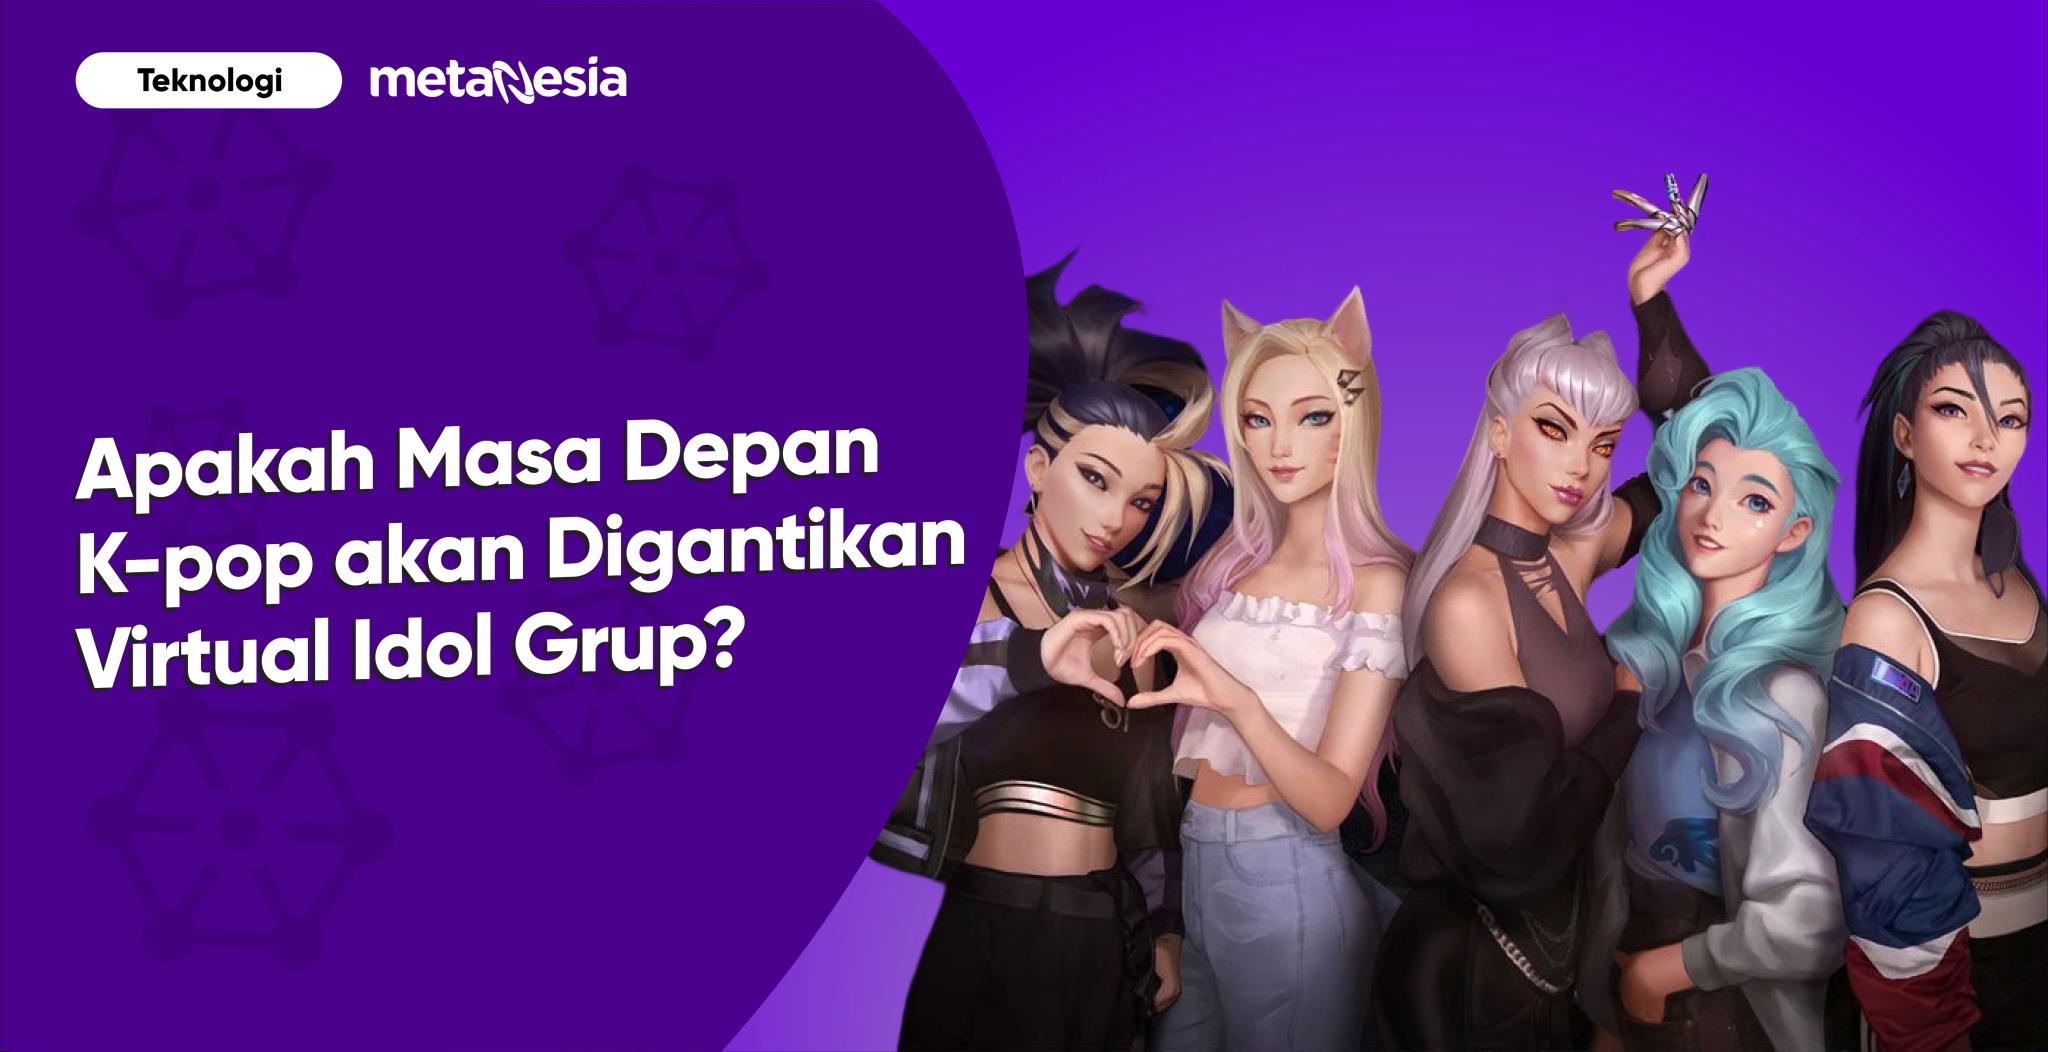 Apakah Masa Depan K-pop akan Digantikan Virtual Idol Grup?